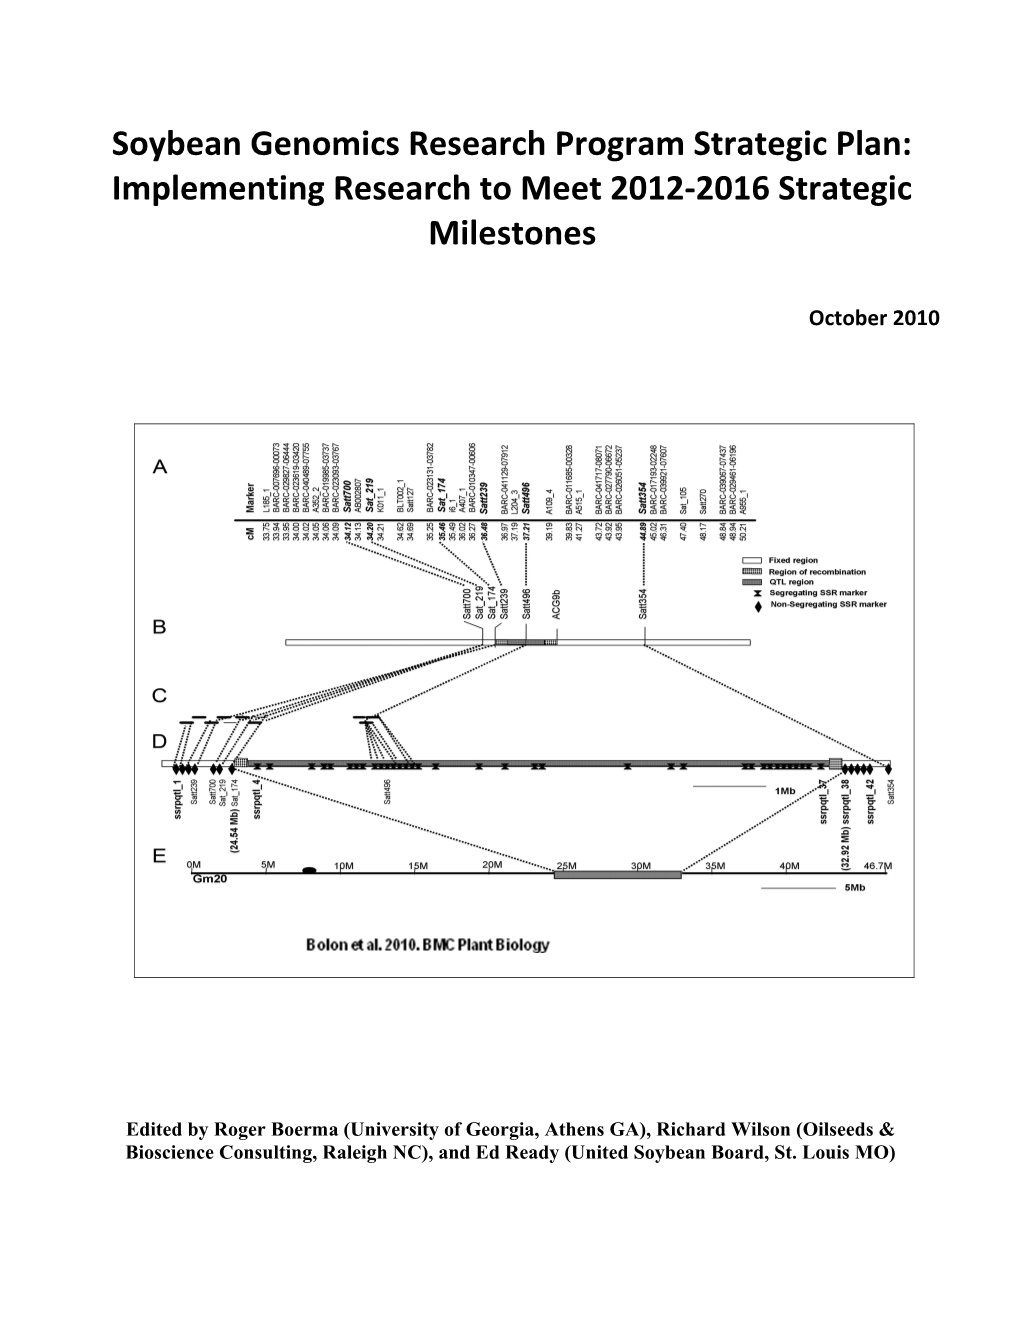 Soybean Genomics Strategic Plan - 2008 2012